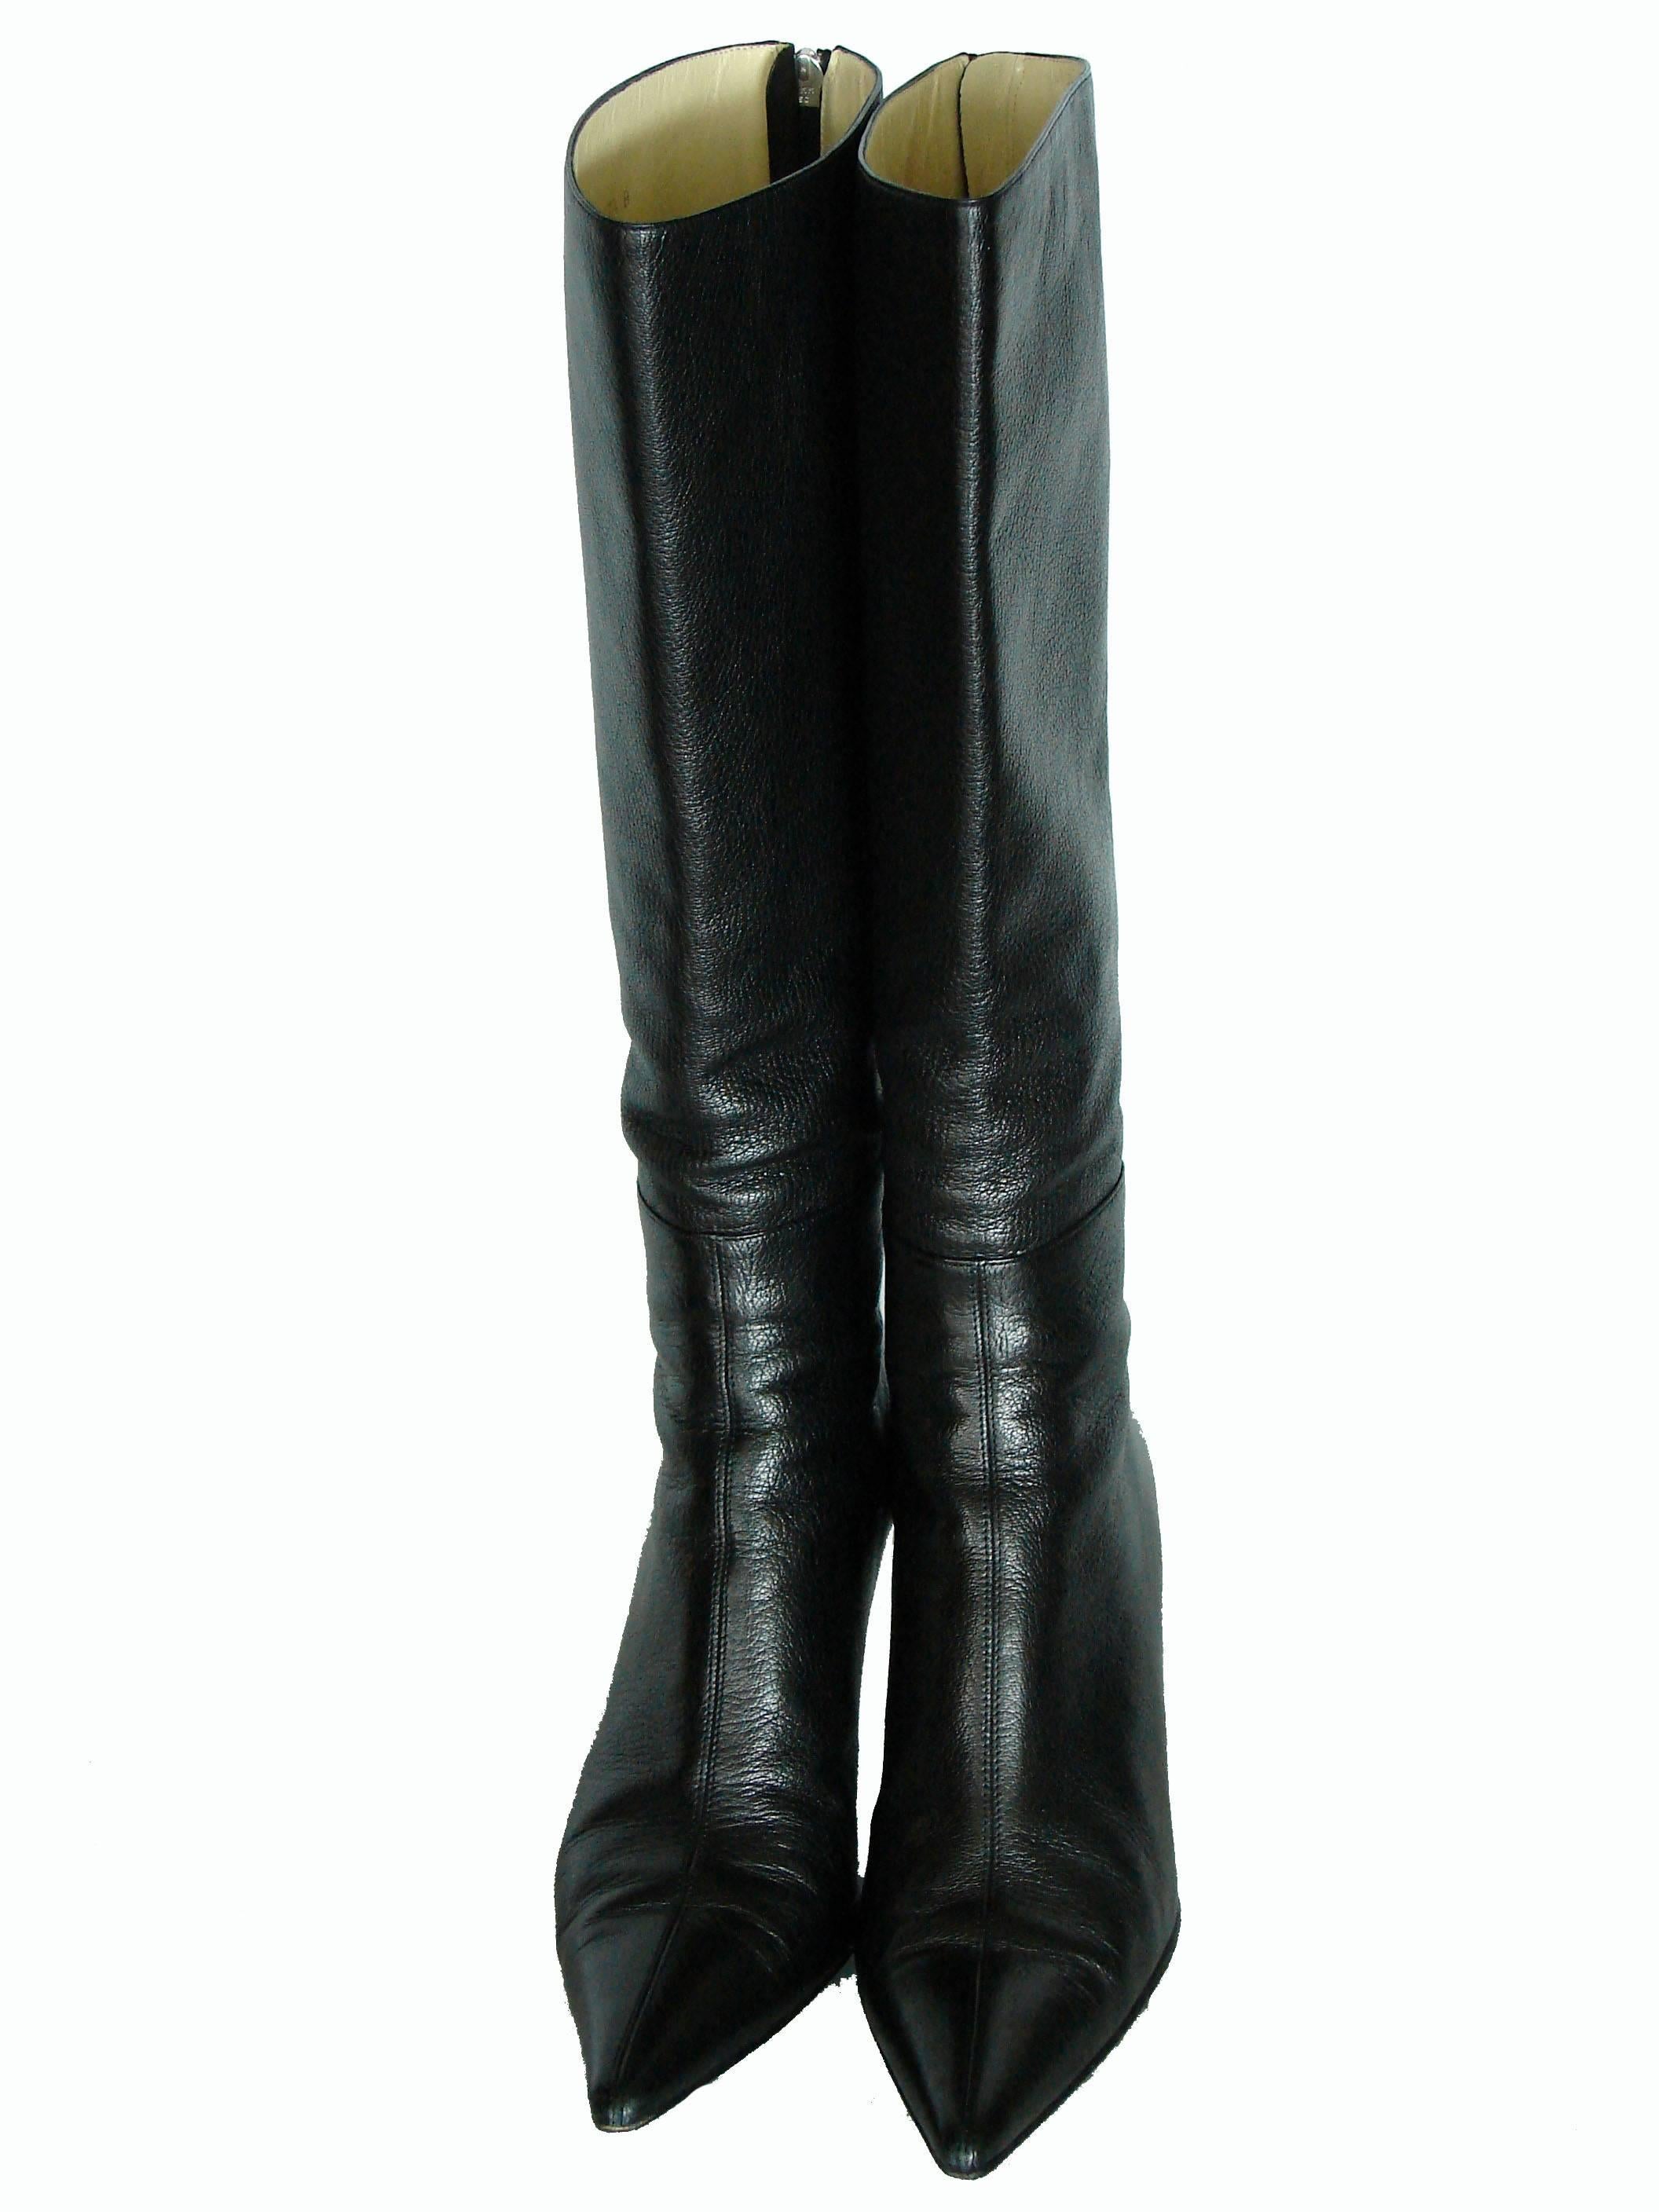 Women's Gucci Black Kidskin Leather Knee High Boots Gomma Bali sz7.5 + Box + Dust Cover